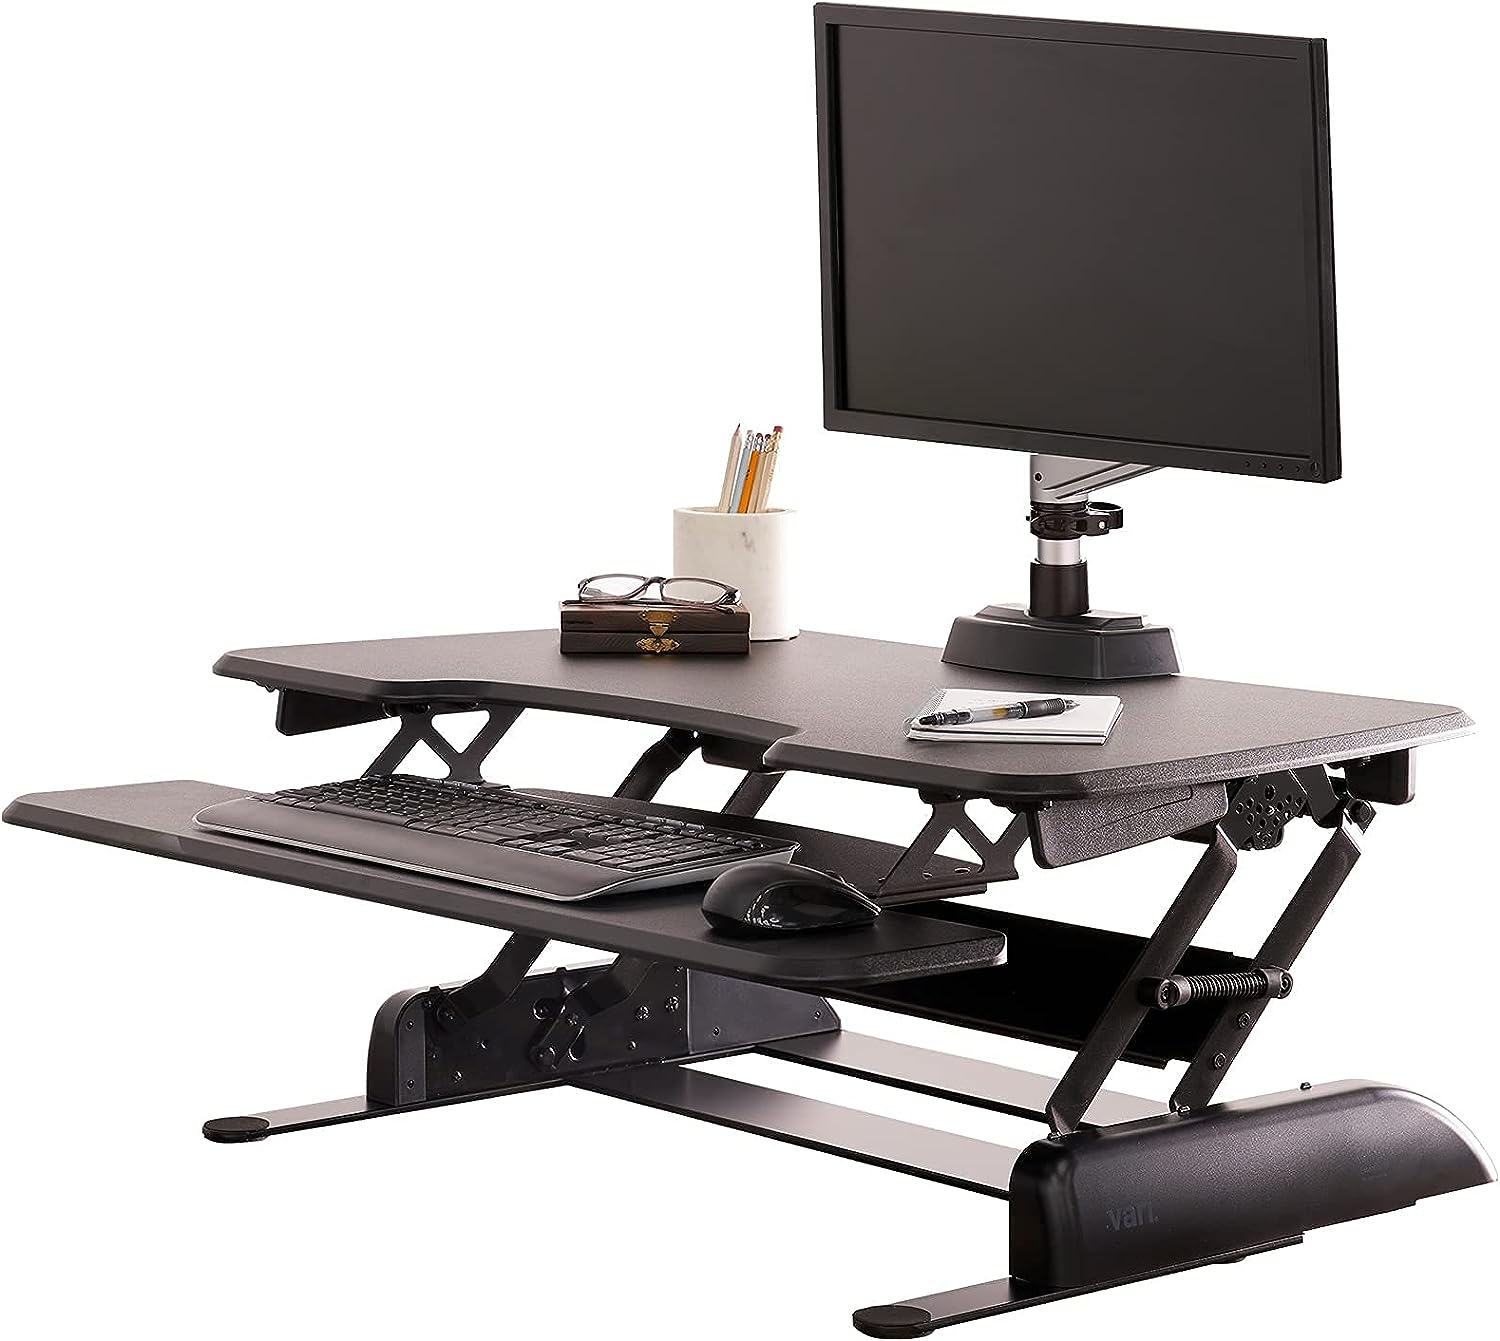 Vari Standing Mat Anti Fatigue Standing Desk Mat 34 x 20 Black